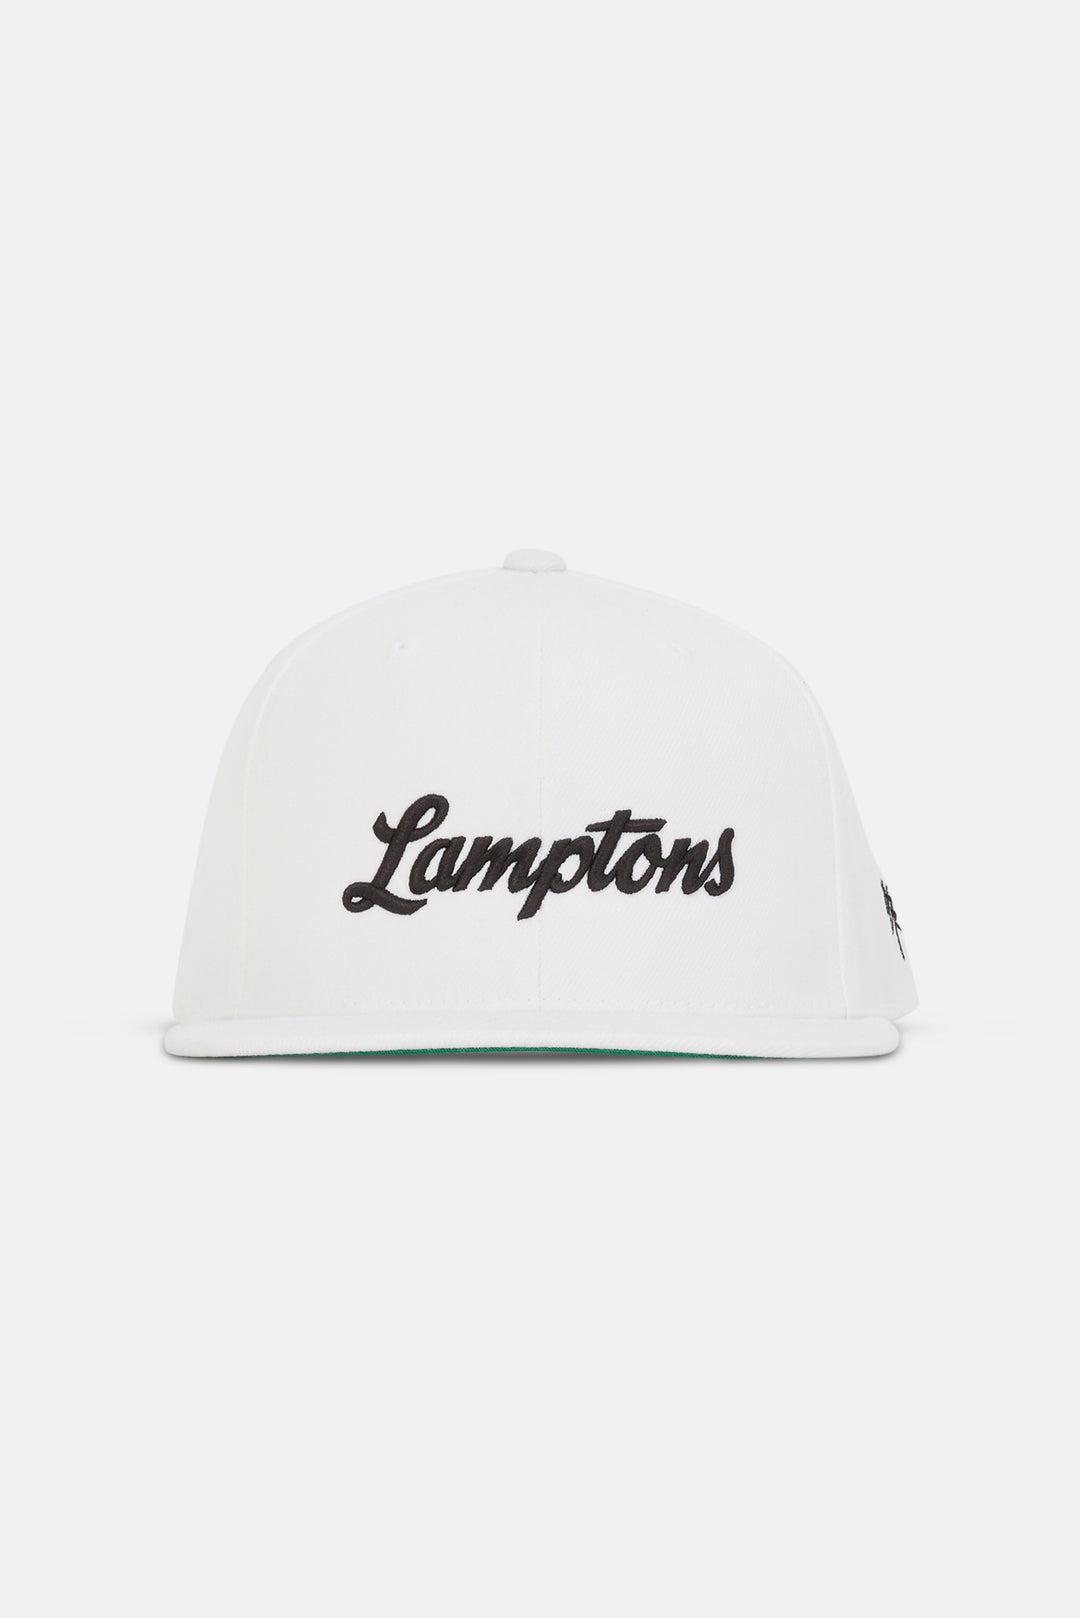 x SSUR Lamptons Snapback White/Black - blueandcream